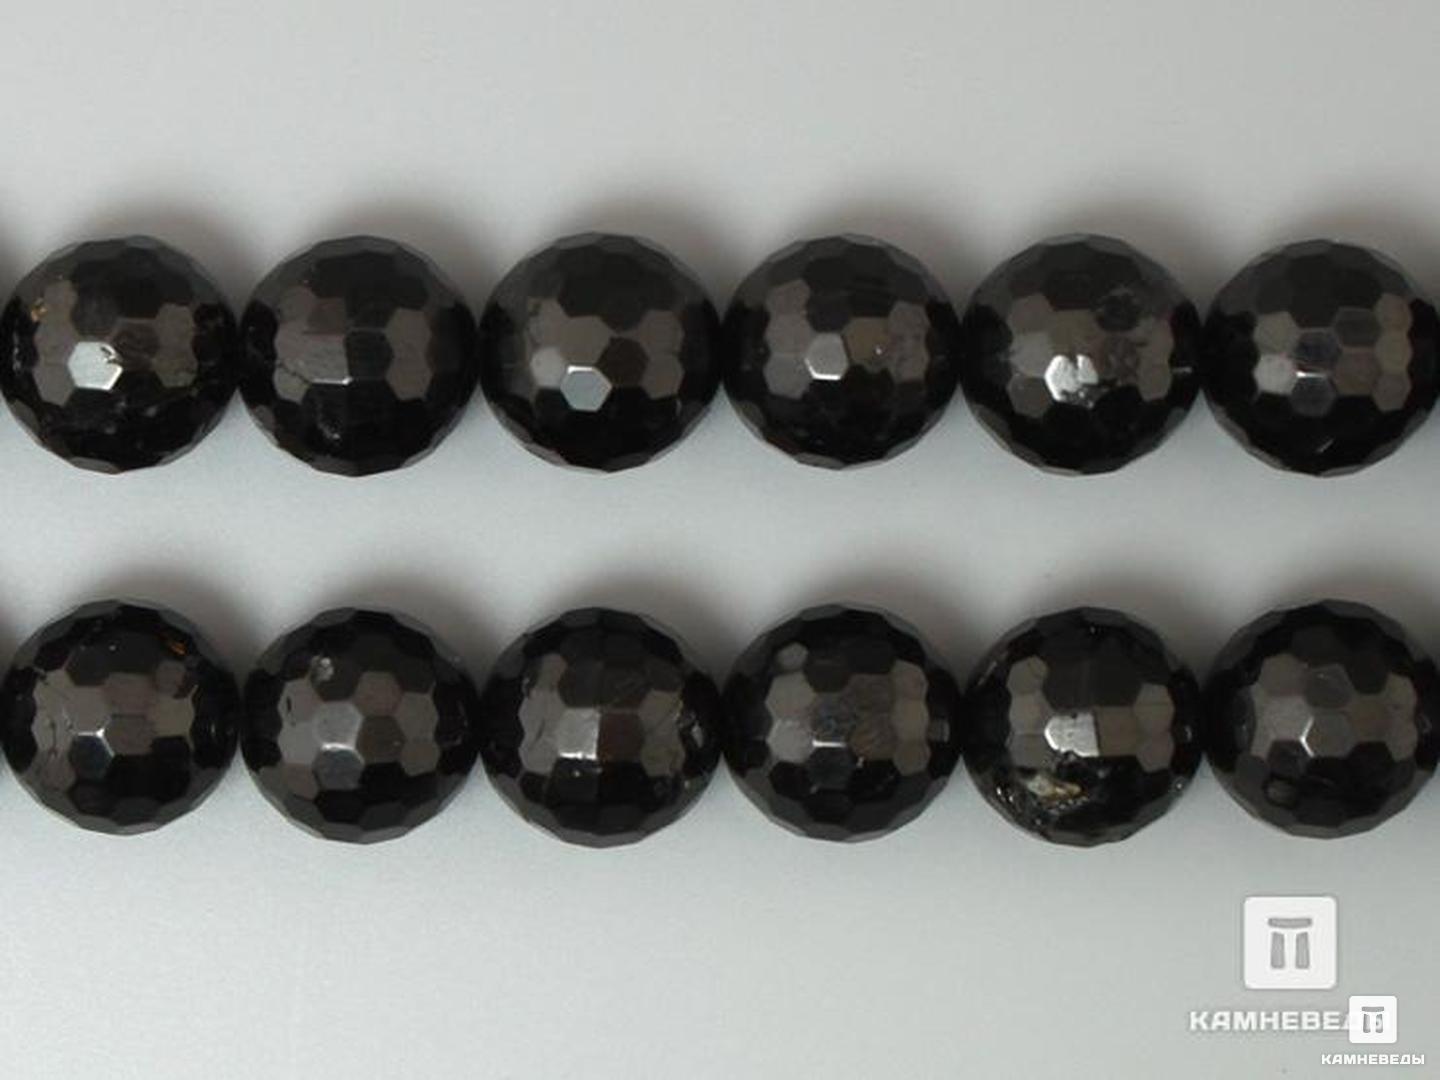 Бусины из шерла (чёрного турмалина), огранка, 39 шт. на нитке,10-11 мм